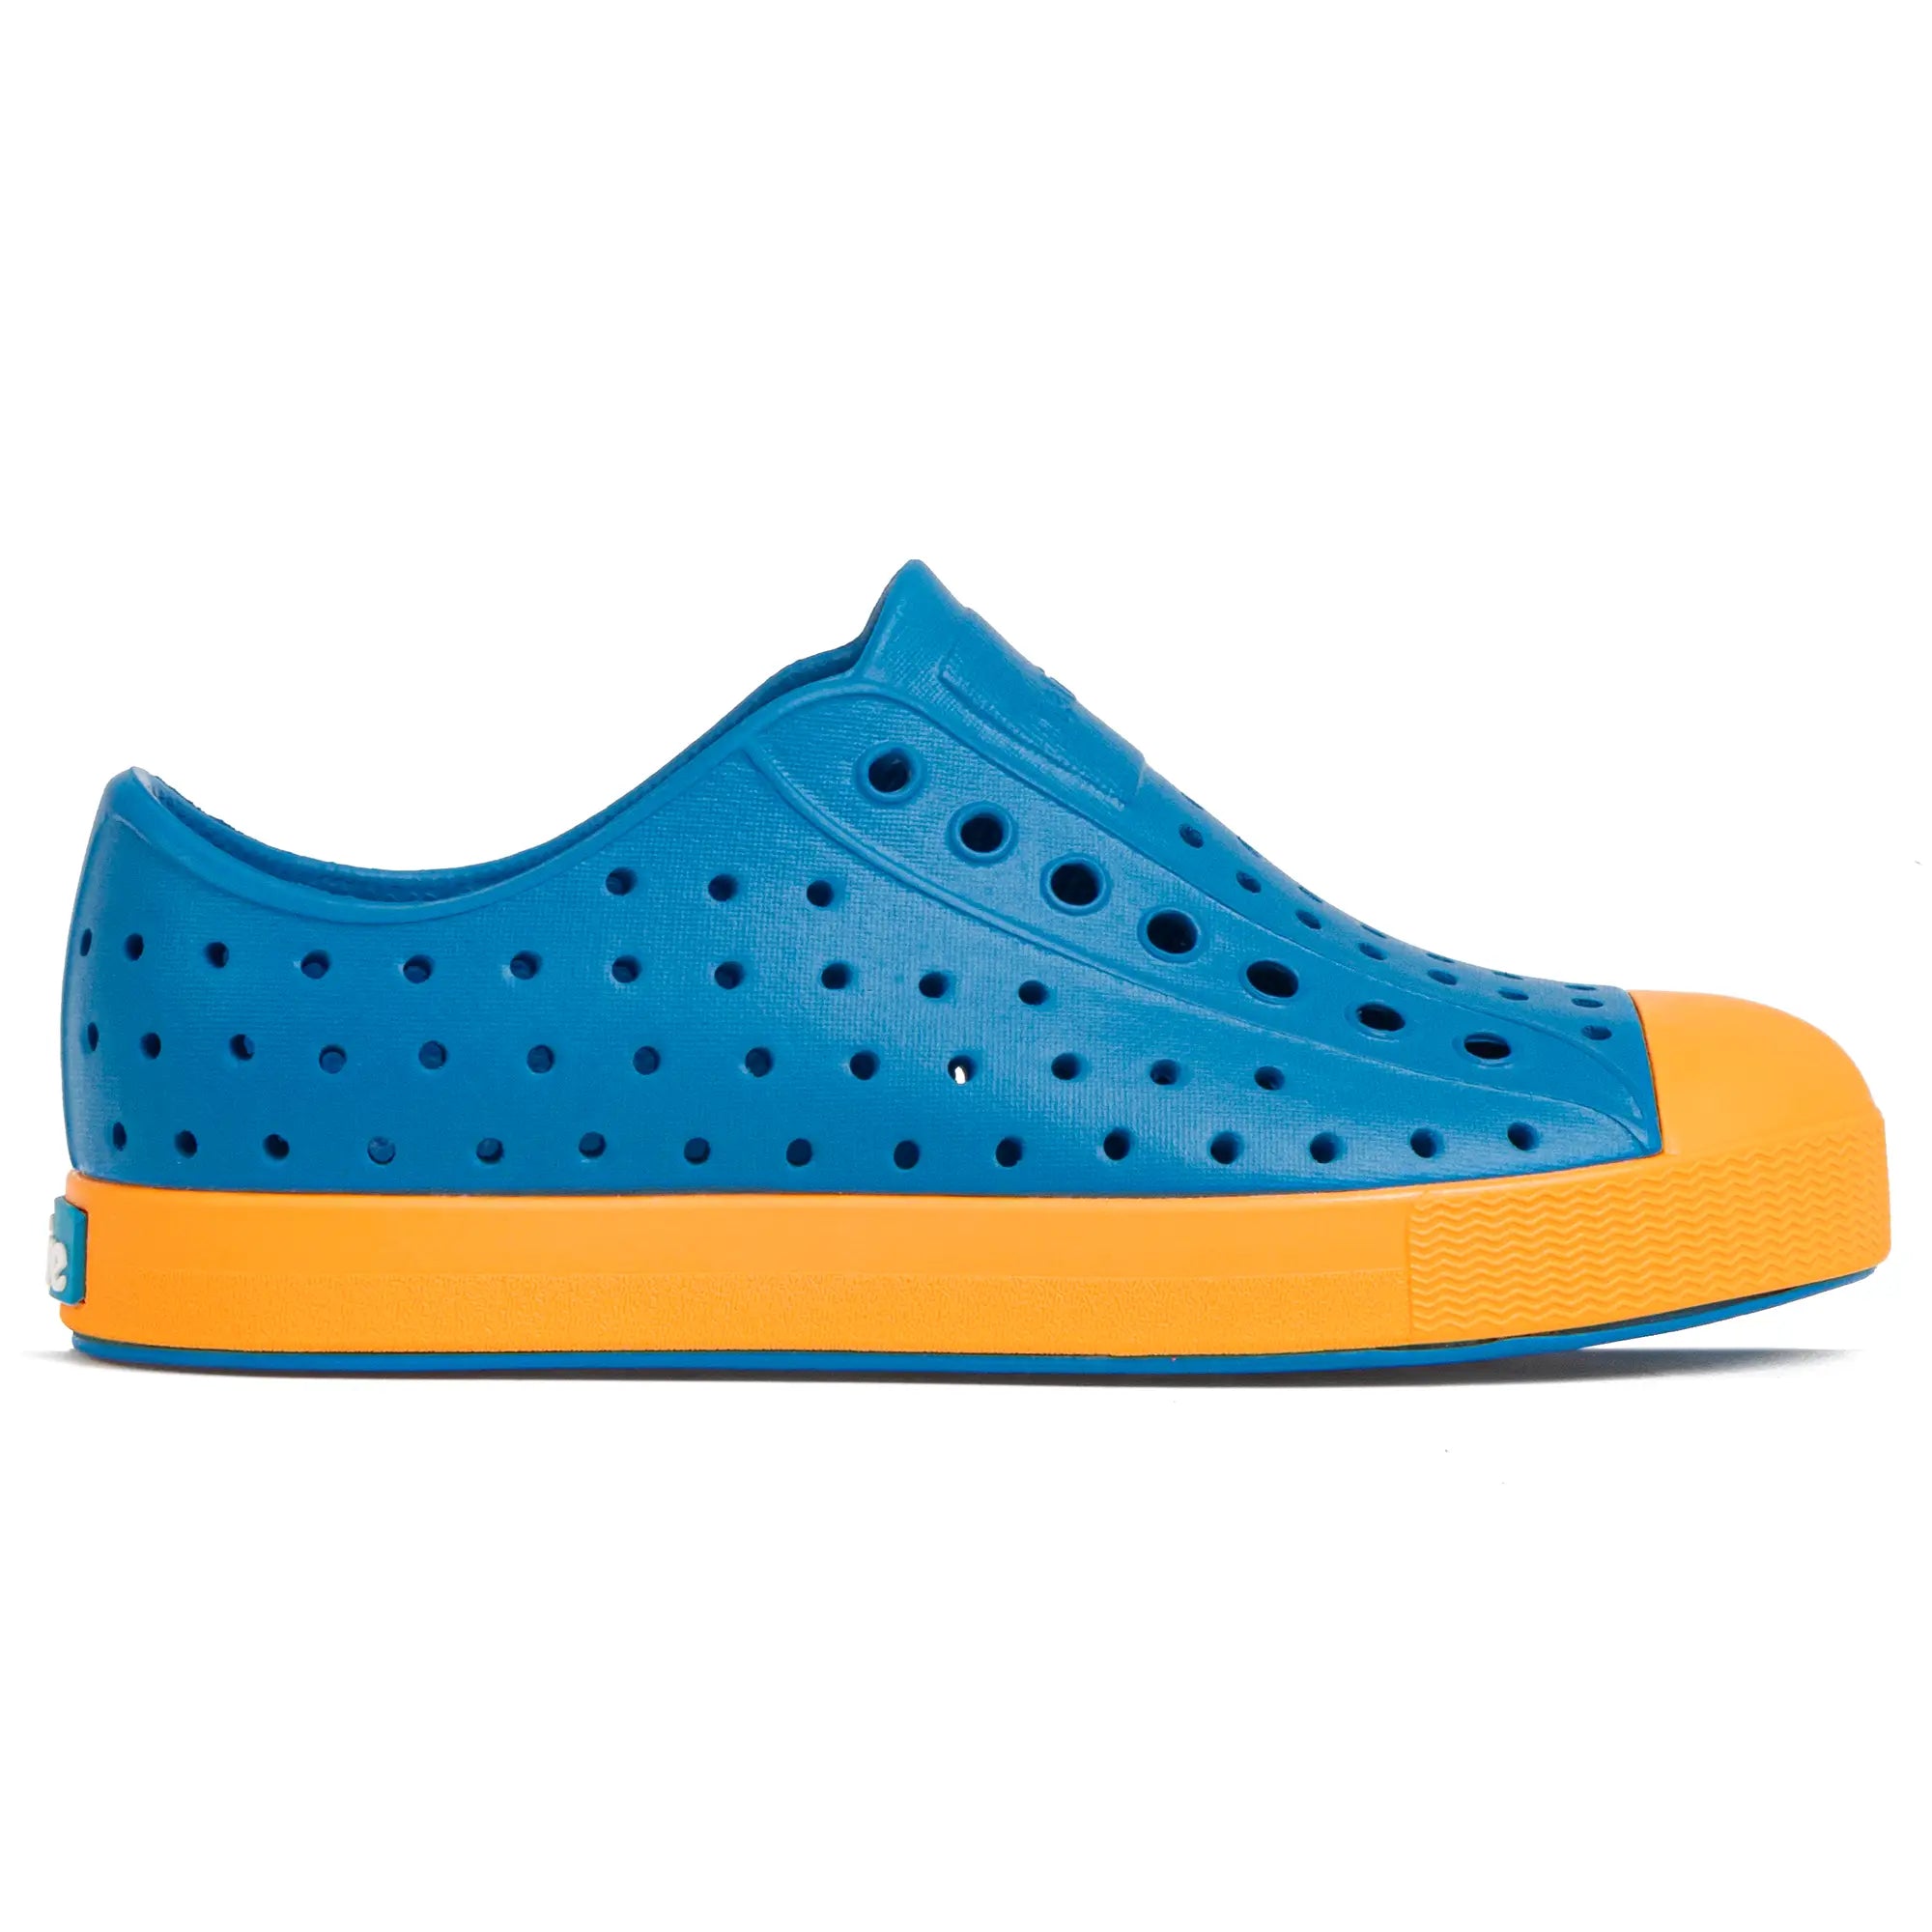 Youth Jefferson Water shoe - Blue/Yellow